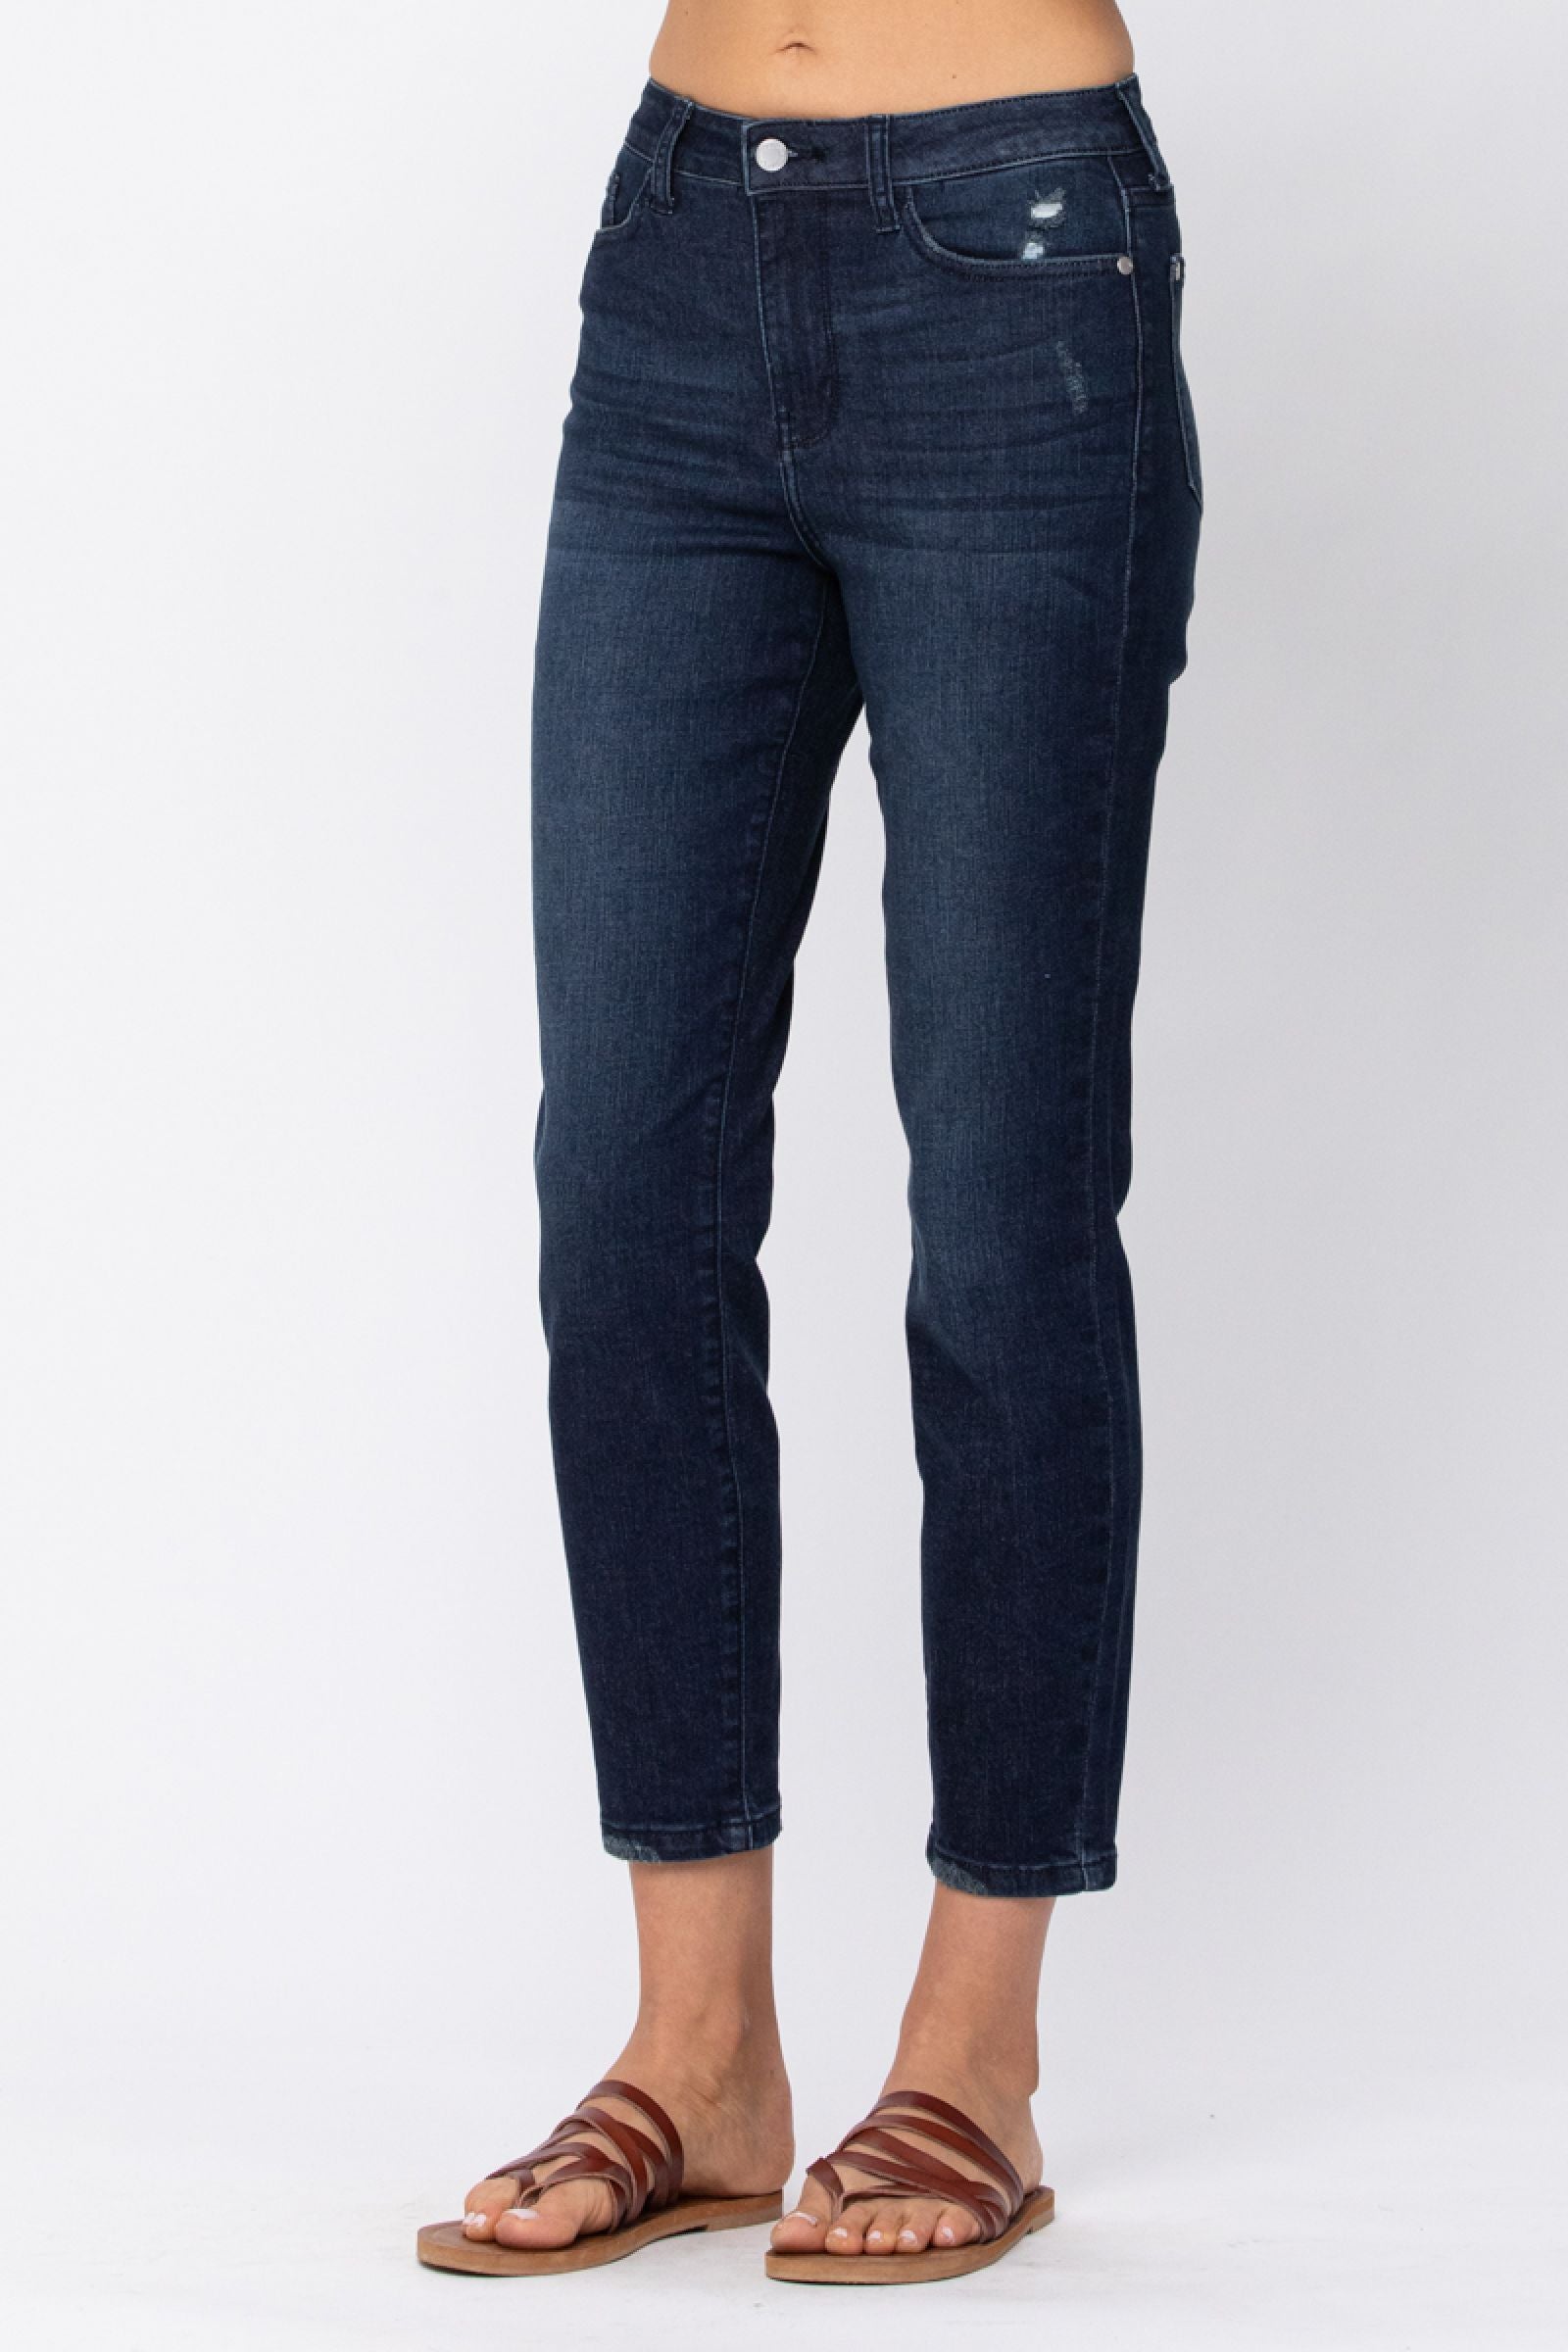 Judy Blue Dark Wash Boyfriend Jeans - 8114 Online Exclusive - Truly Simple Boutique